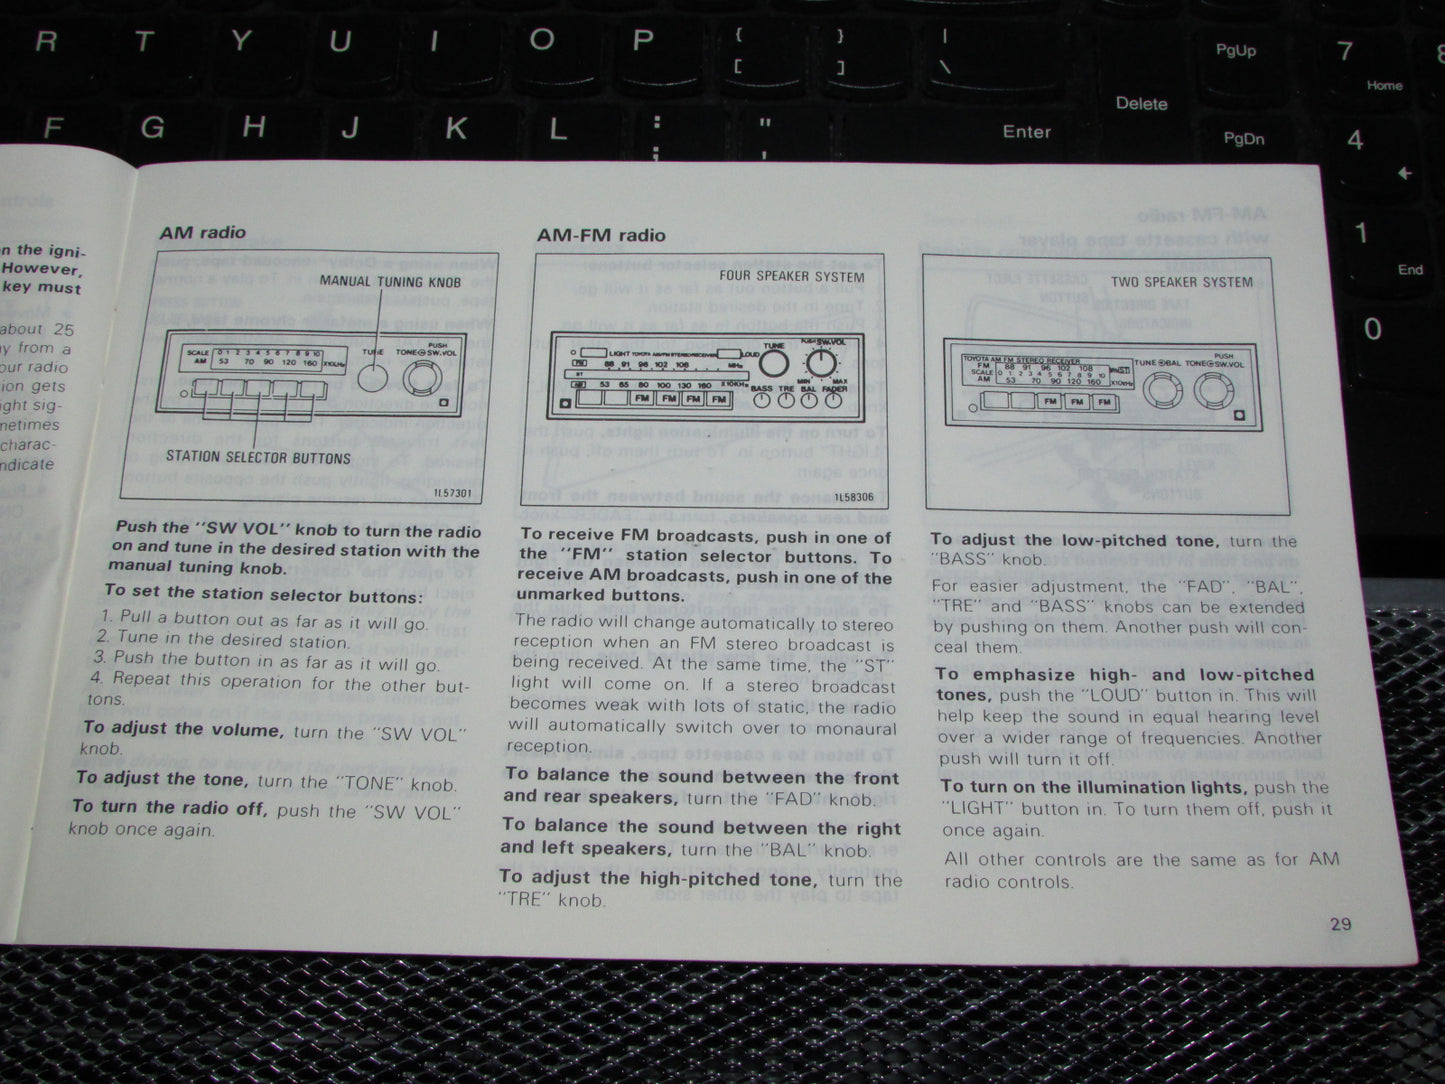 Toyota Tercel (1983) Owners Manual